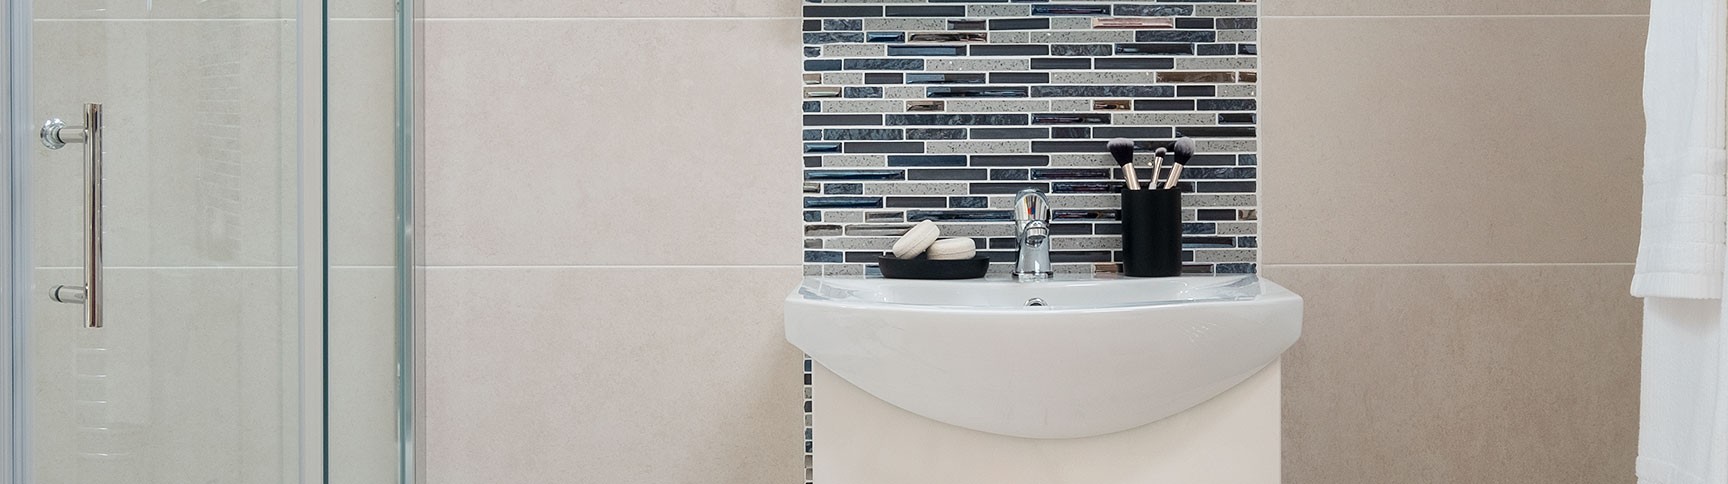 Semi-Recessed Basins | Vanity Basins | World of Tiles, Bathrooms & Wood Flooring